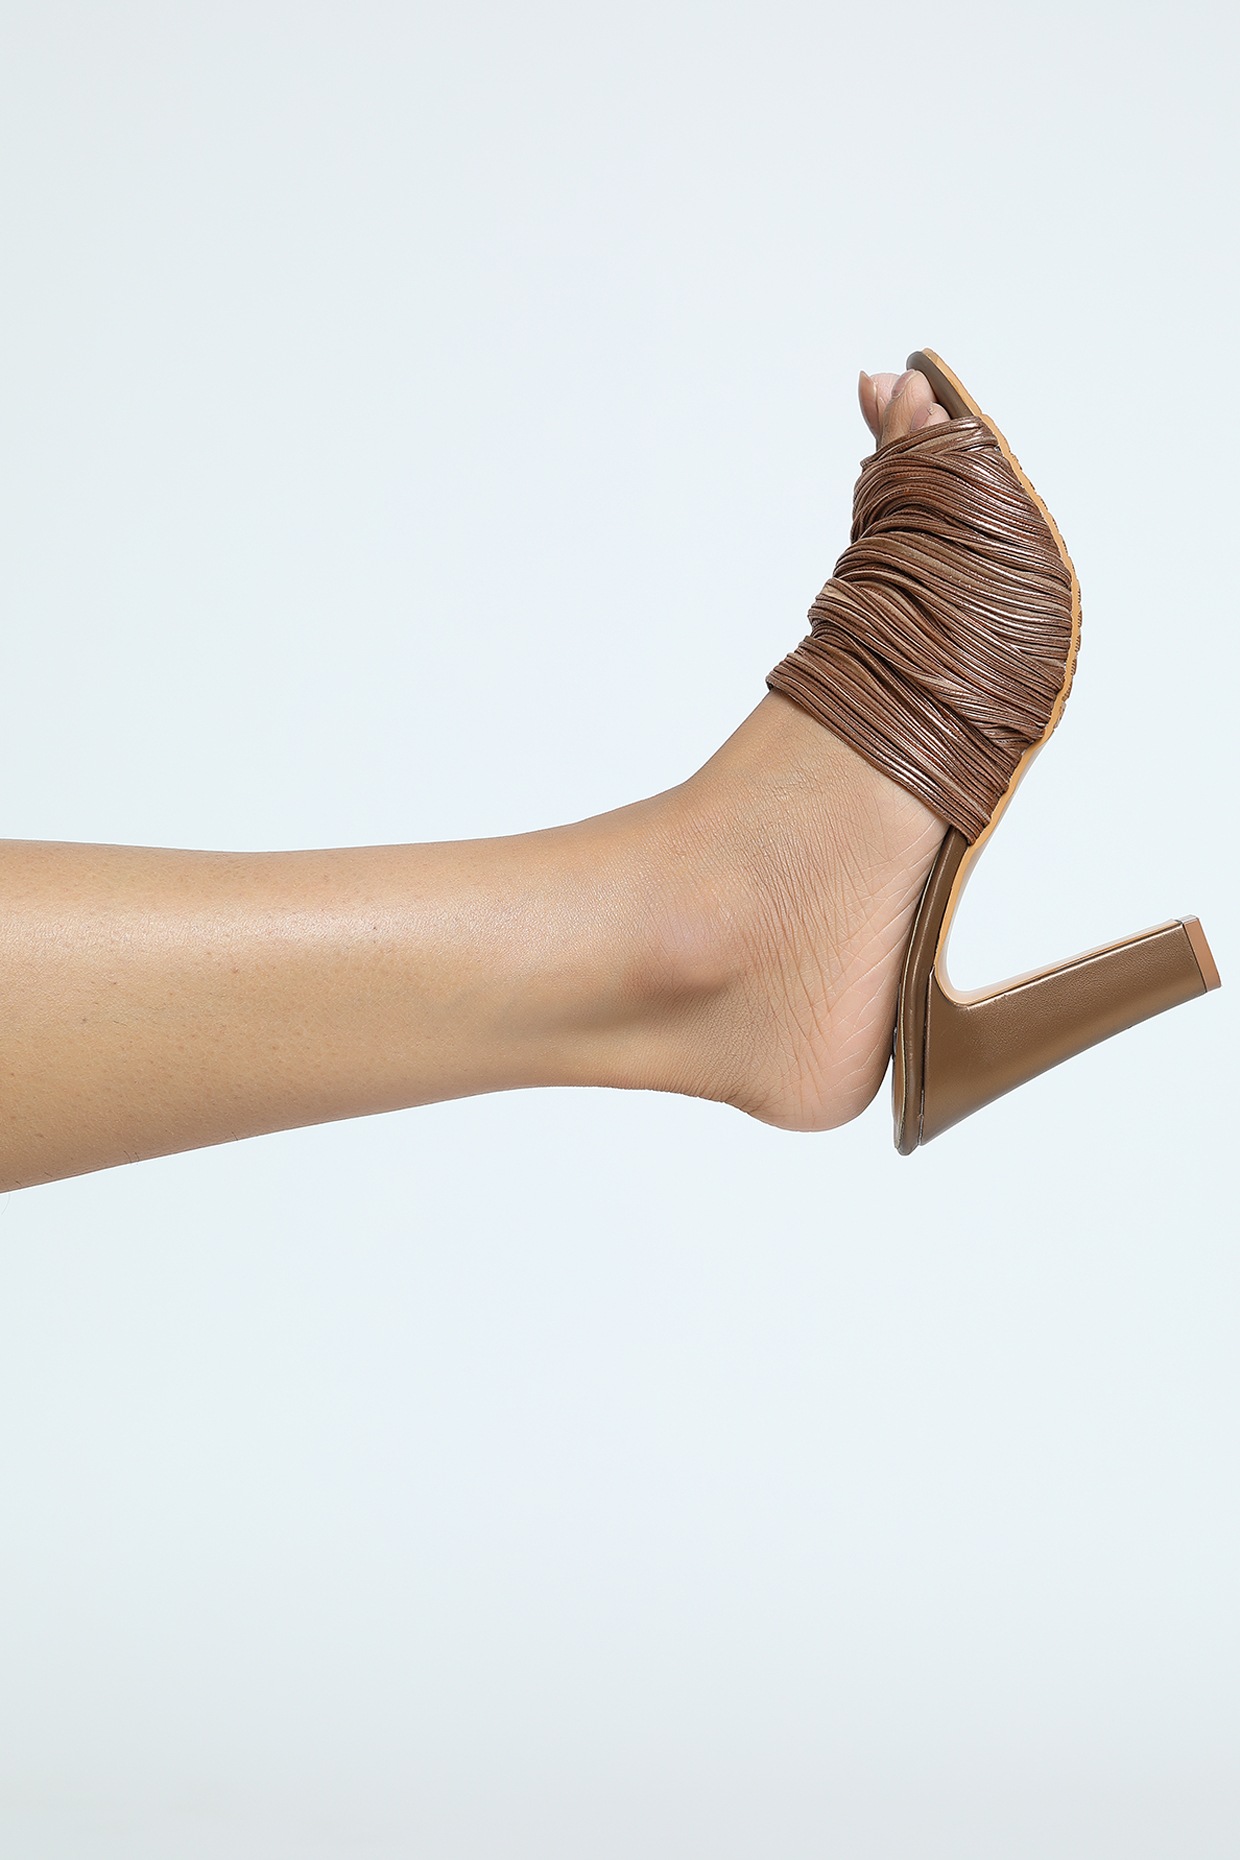 Dolce & Gabbana | Shoes | Dolce Gabbana Metallic Brown Ankle Strap Heels 37  | Poshmark